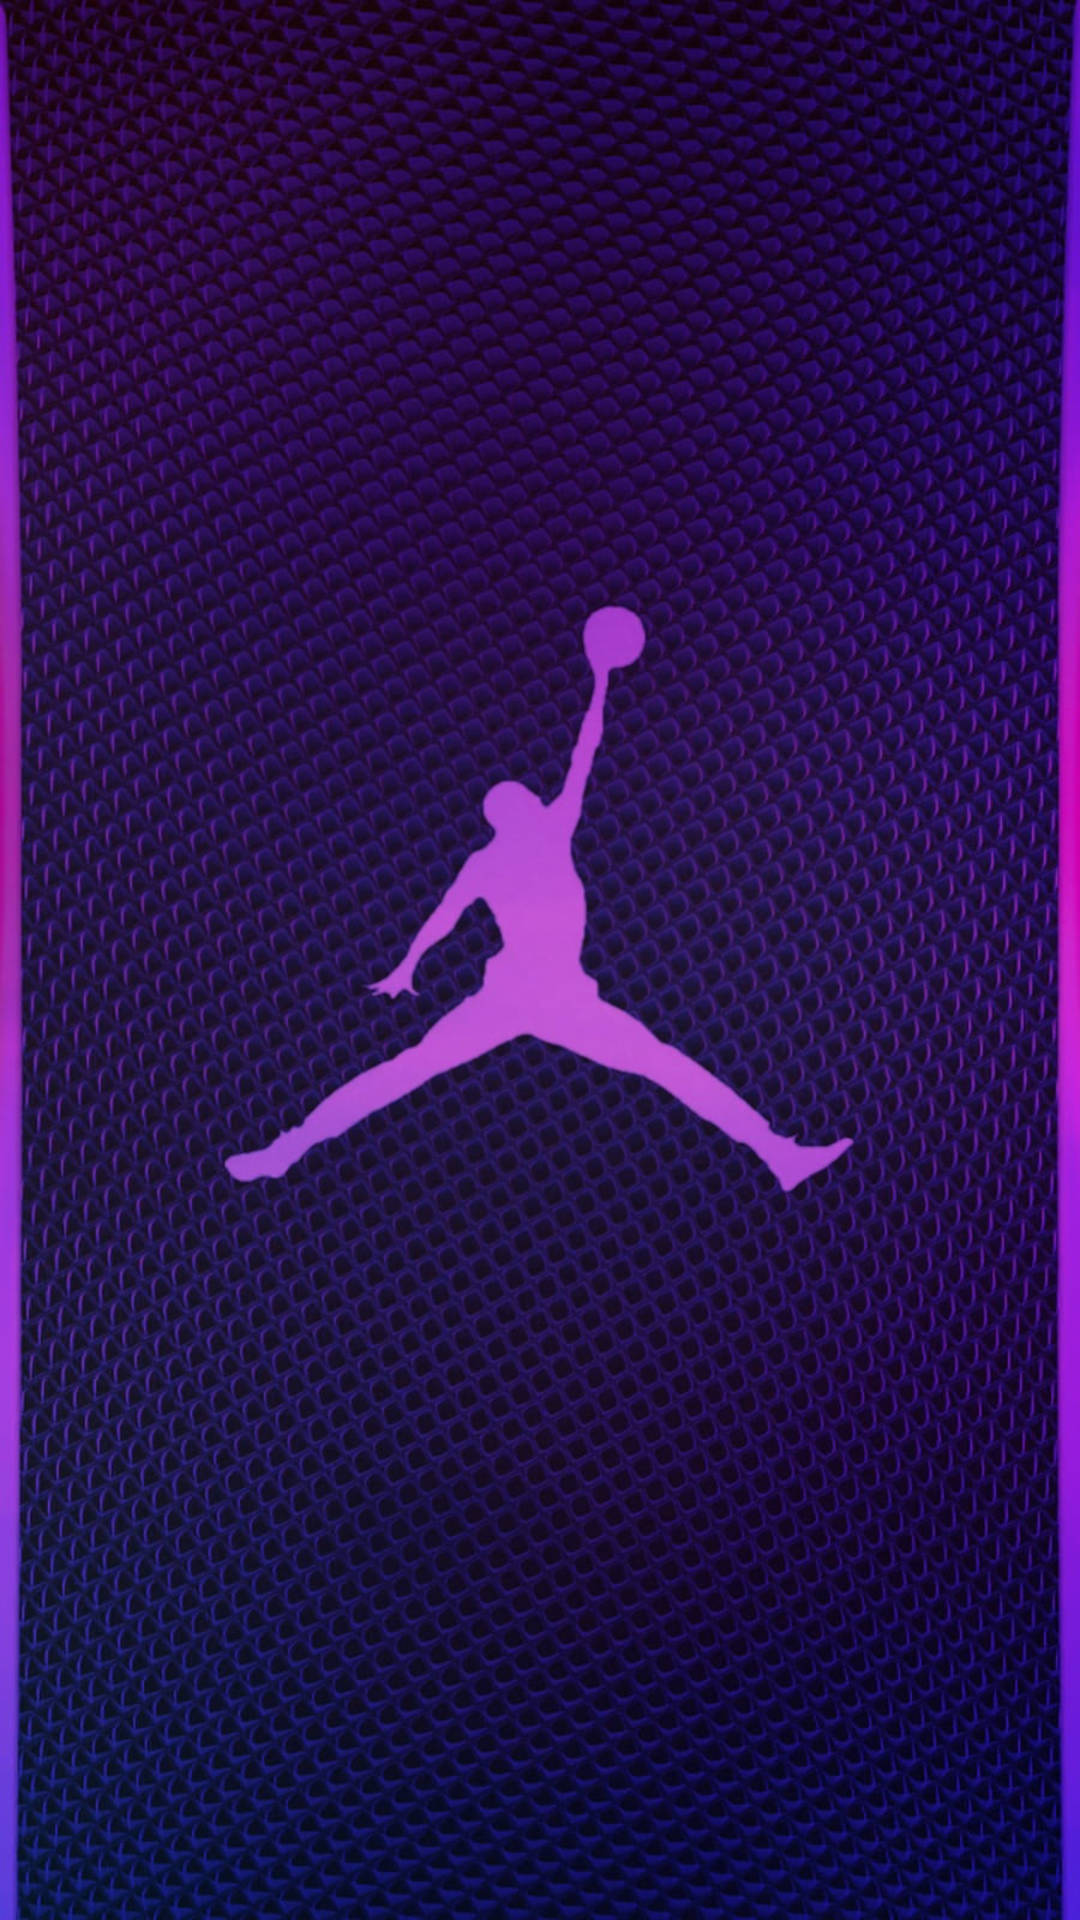 Air Jordan 1920X3413 Wallpaper and Background Image